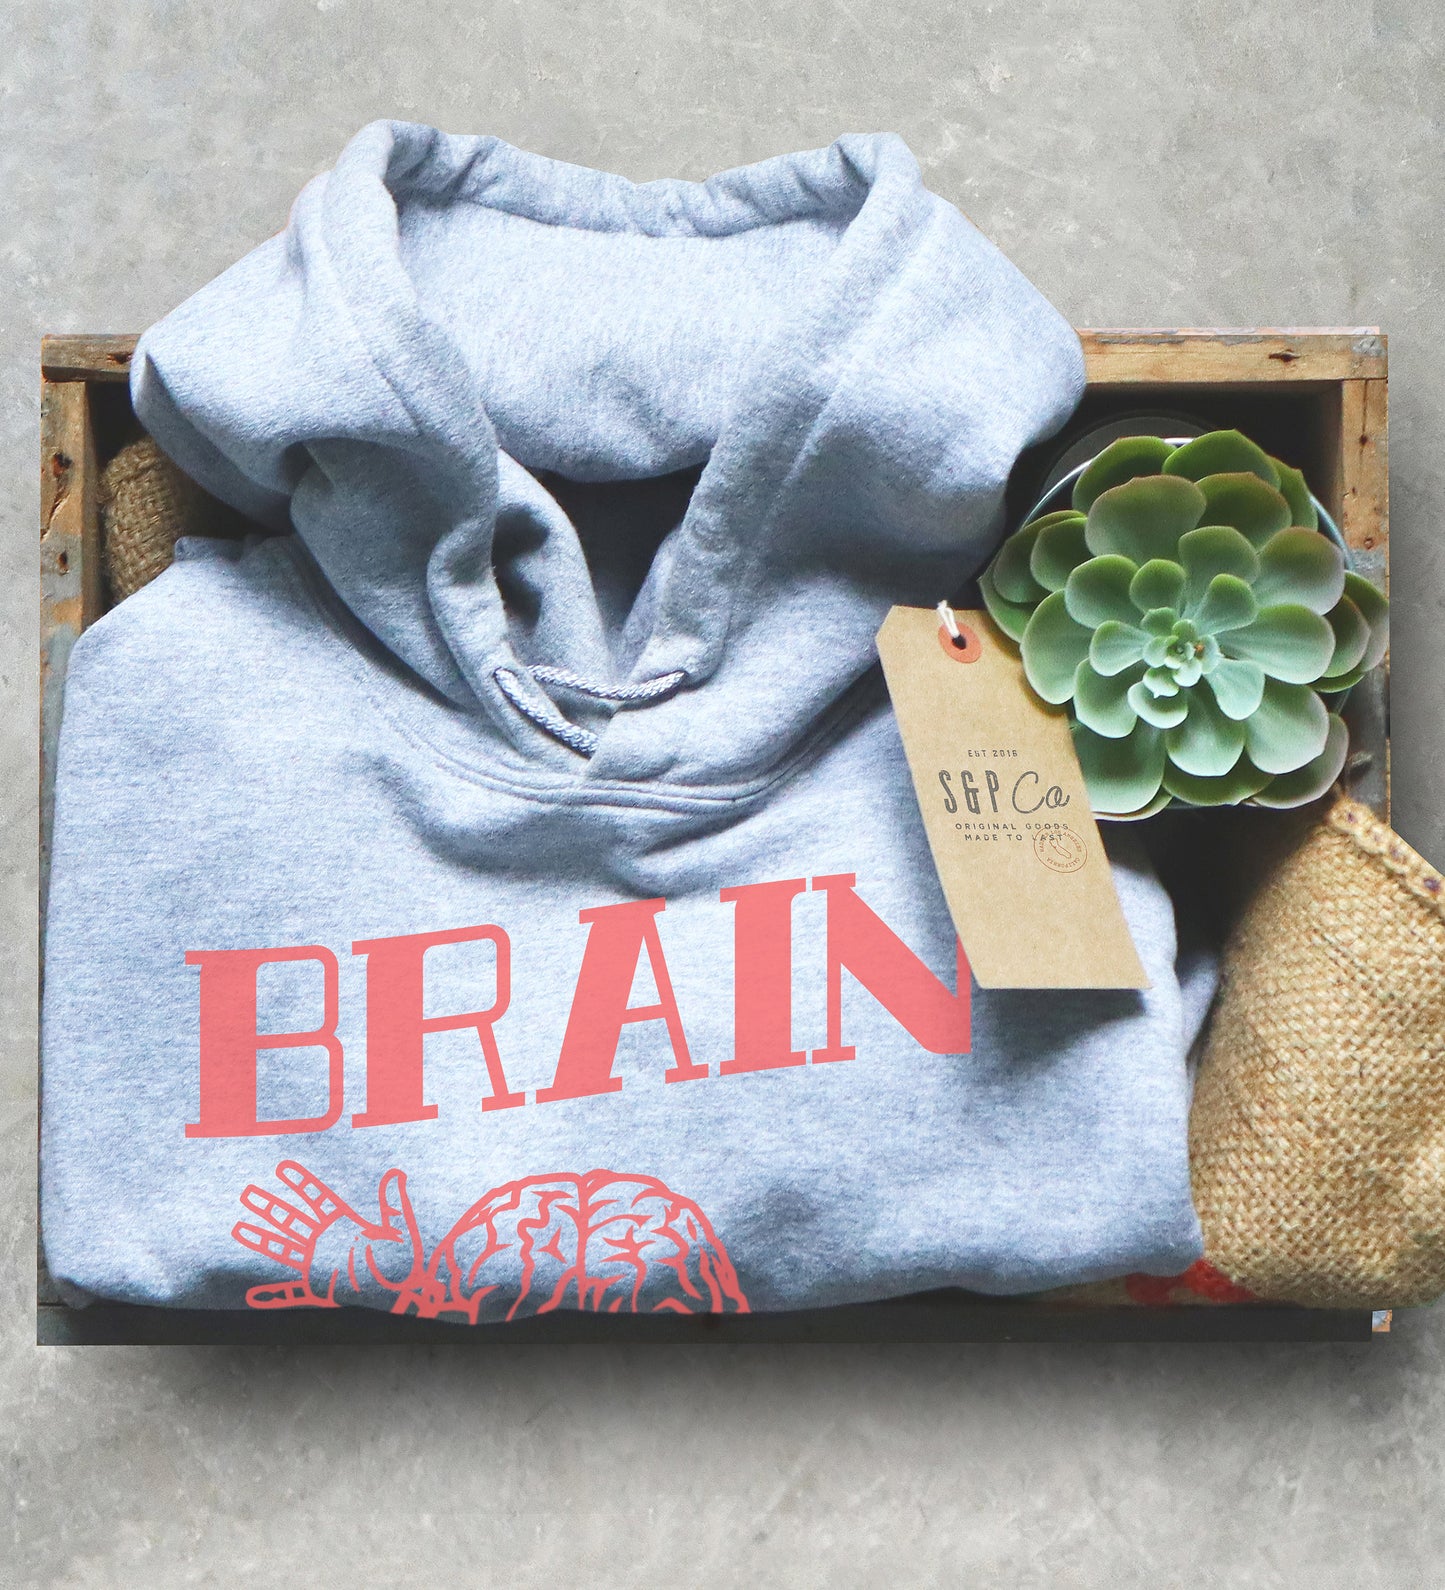 Brain Waves Hoodie - Science hoodie, Science gift, Funny science shirt, Surgeon shirt, Science teacher gift, Surgeon gift, Geek shirt